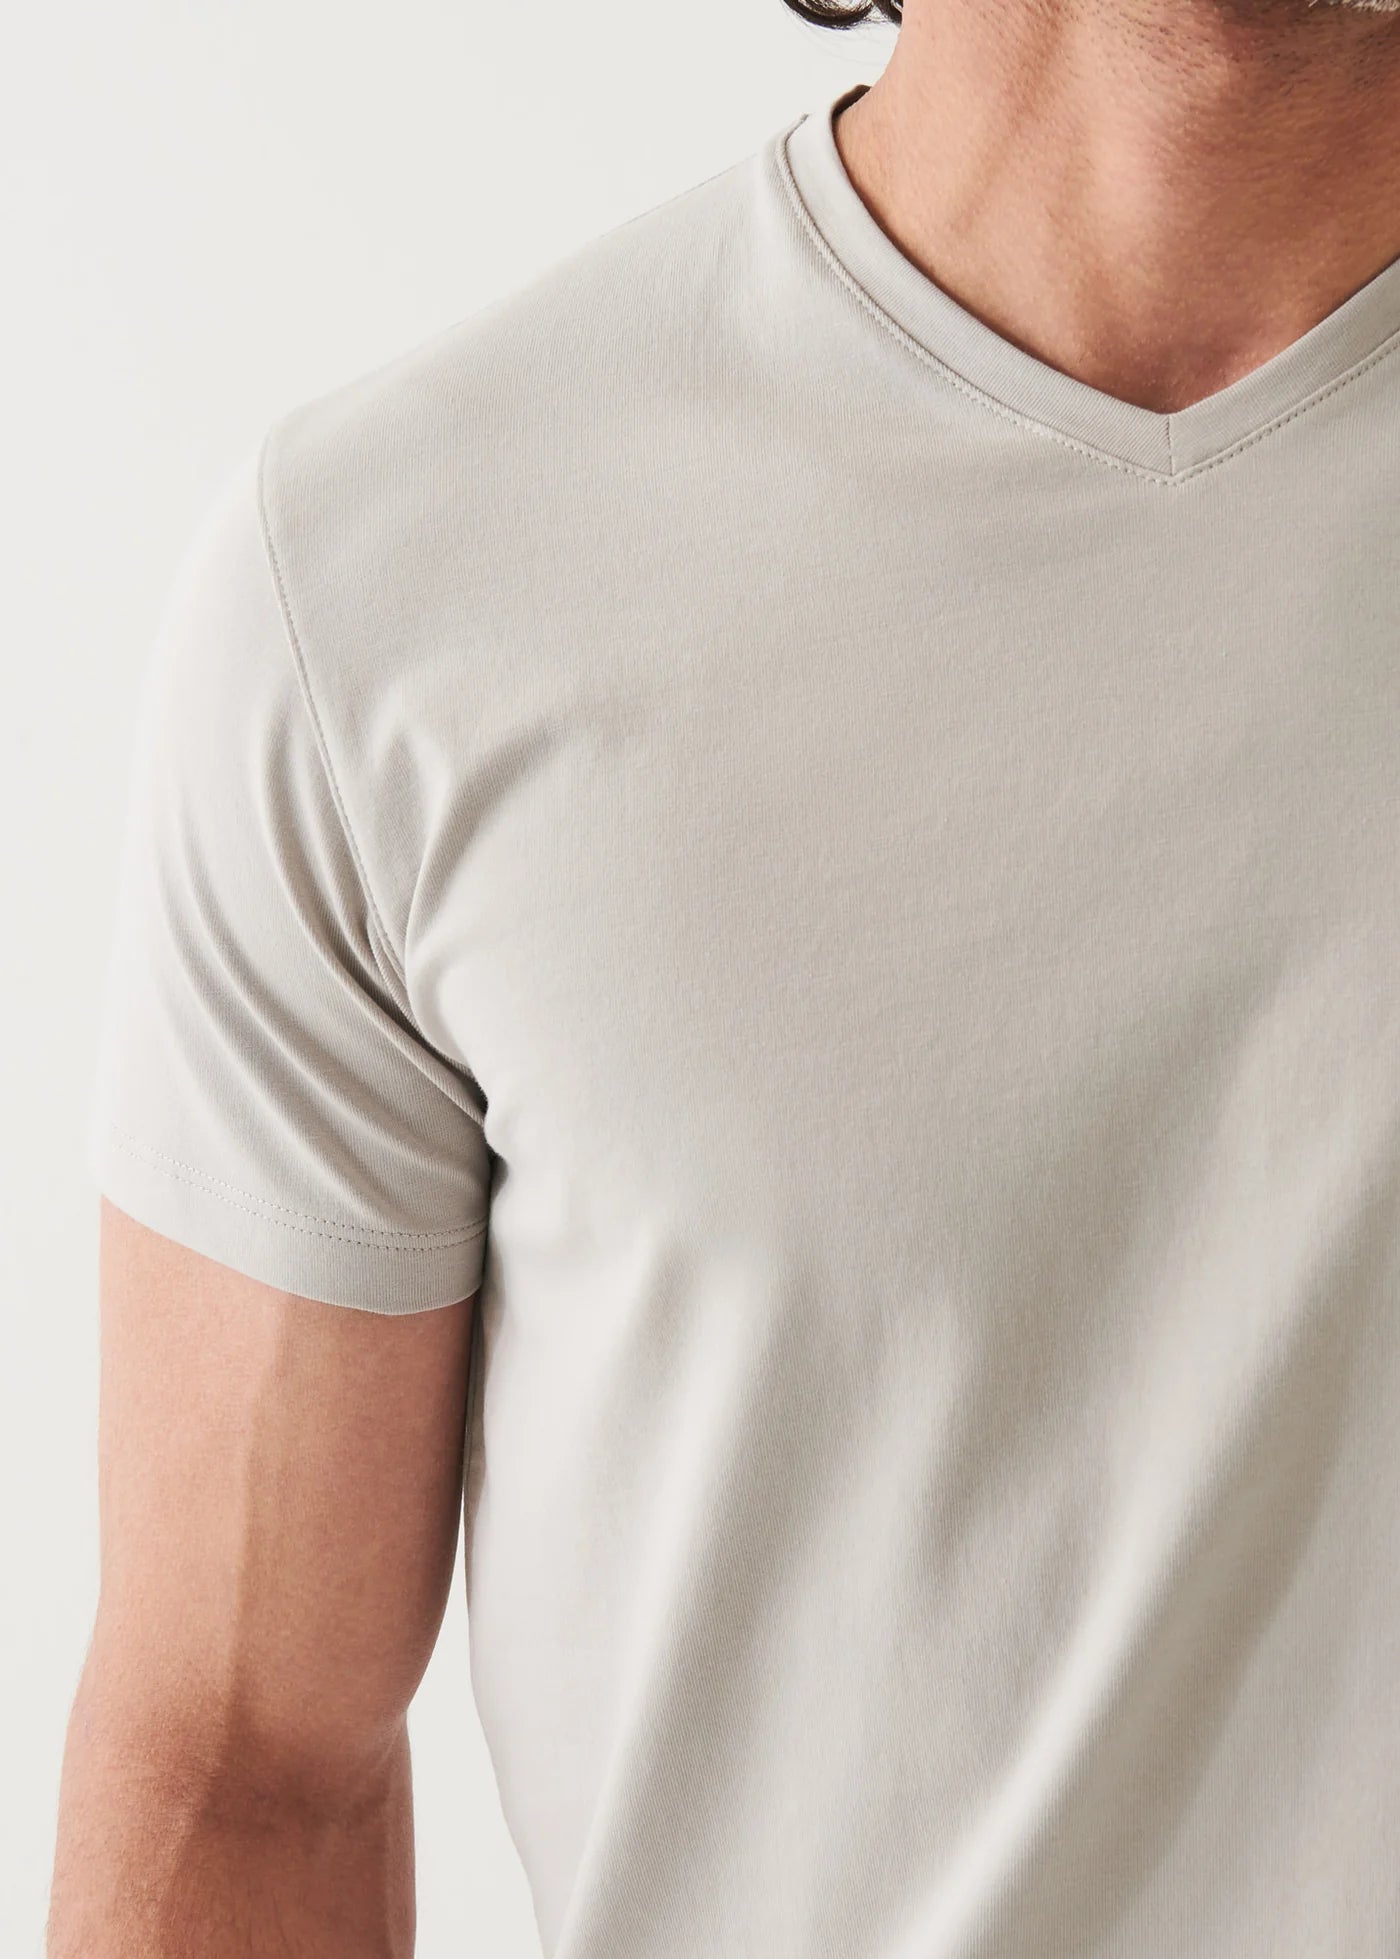 Patrick Assaraf Iconic V-Neck Pima Cotton Stretch T-Shirt in Lunar